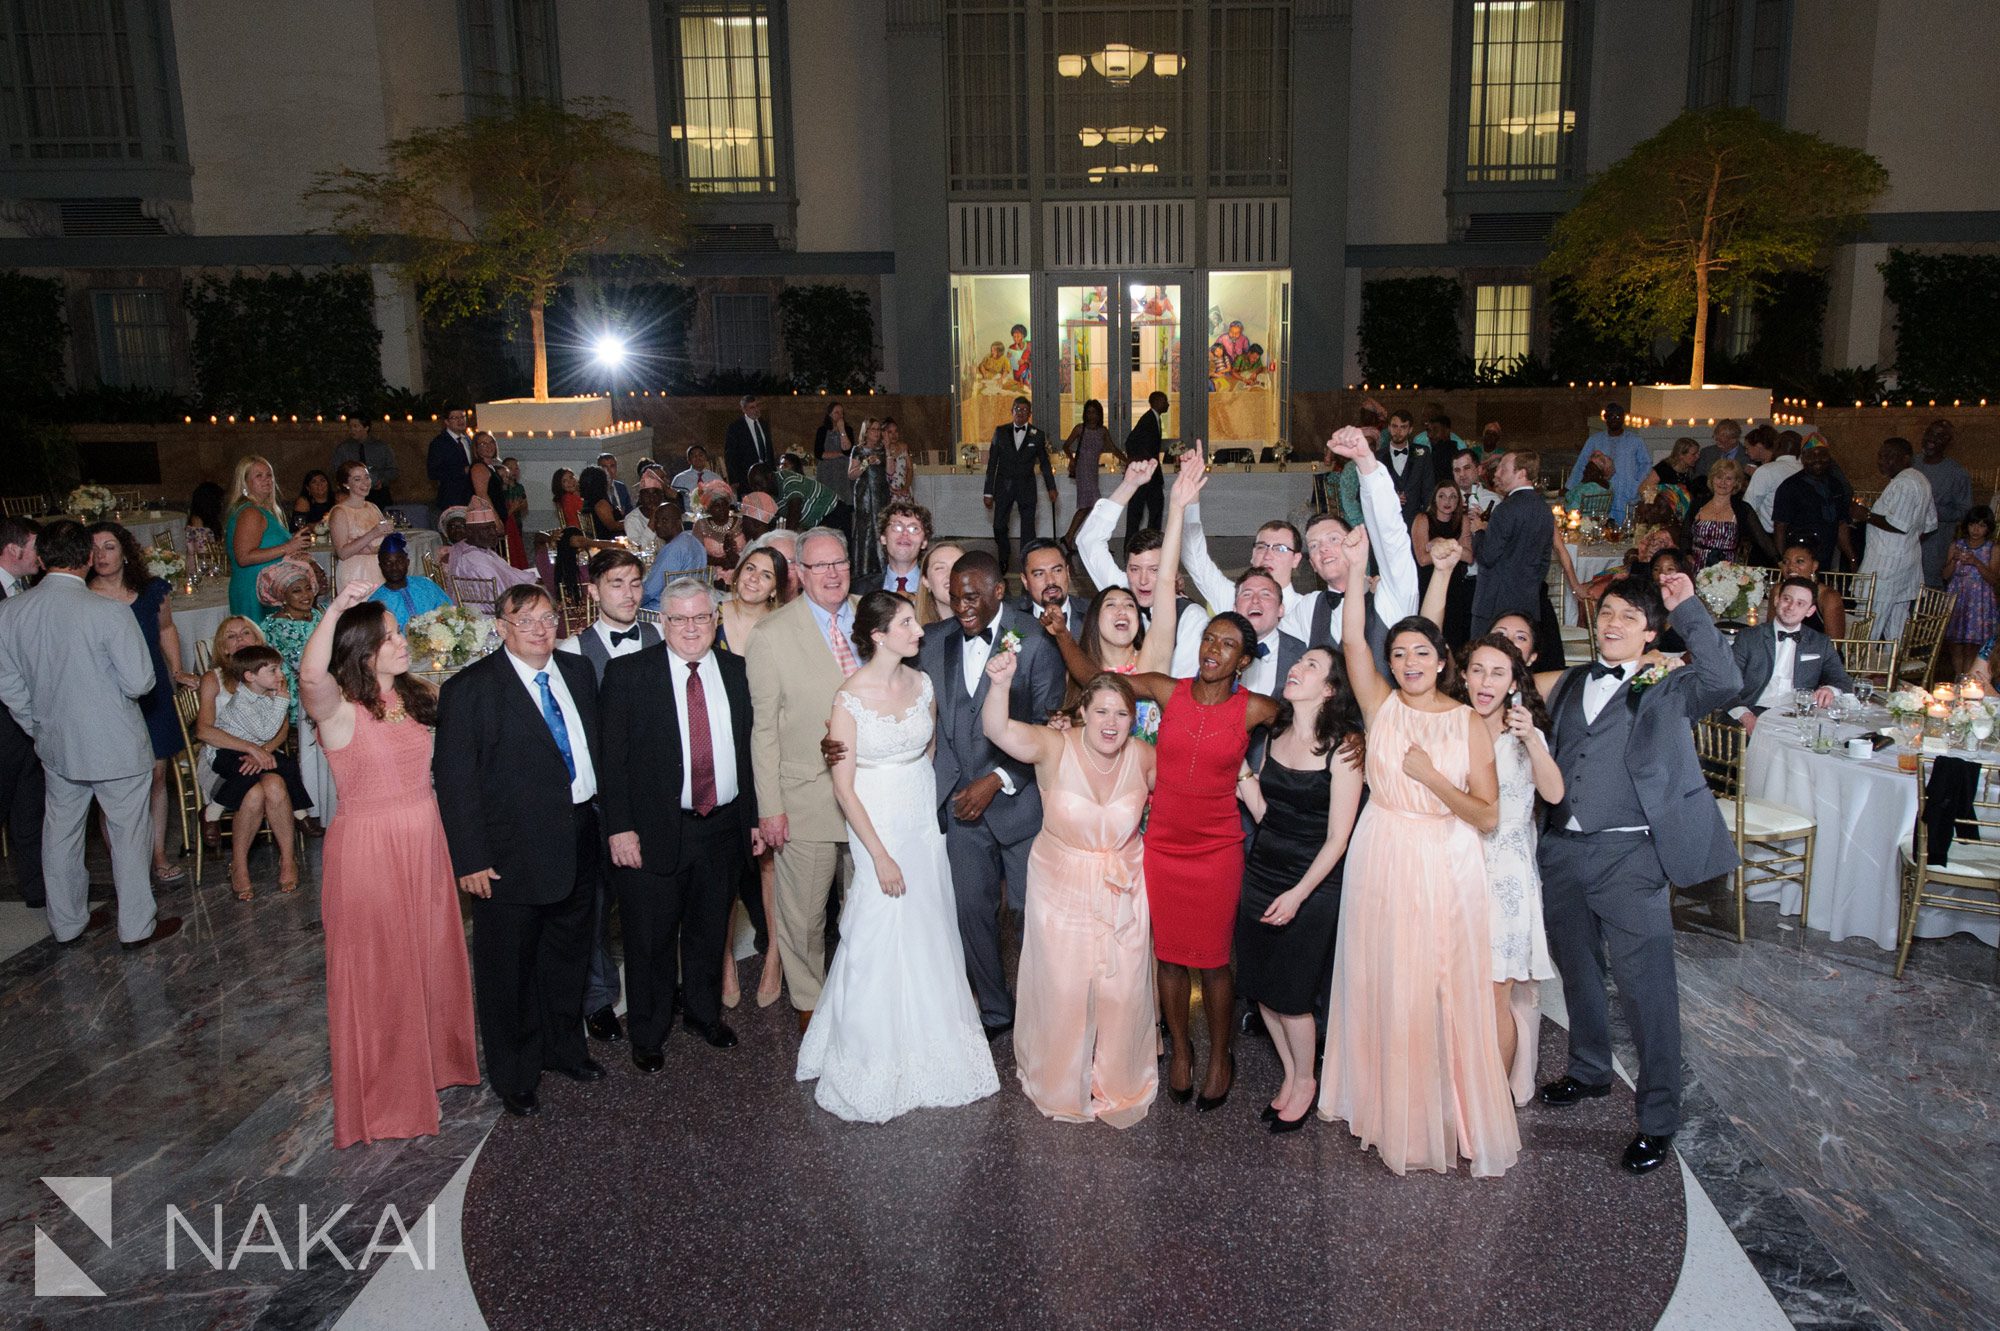 Harold Washington wedding reception dancing picture